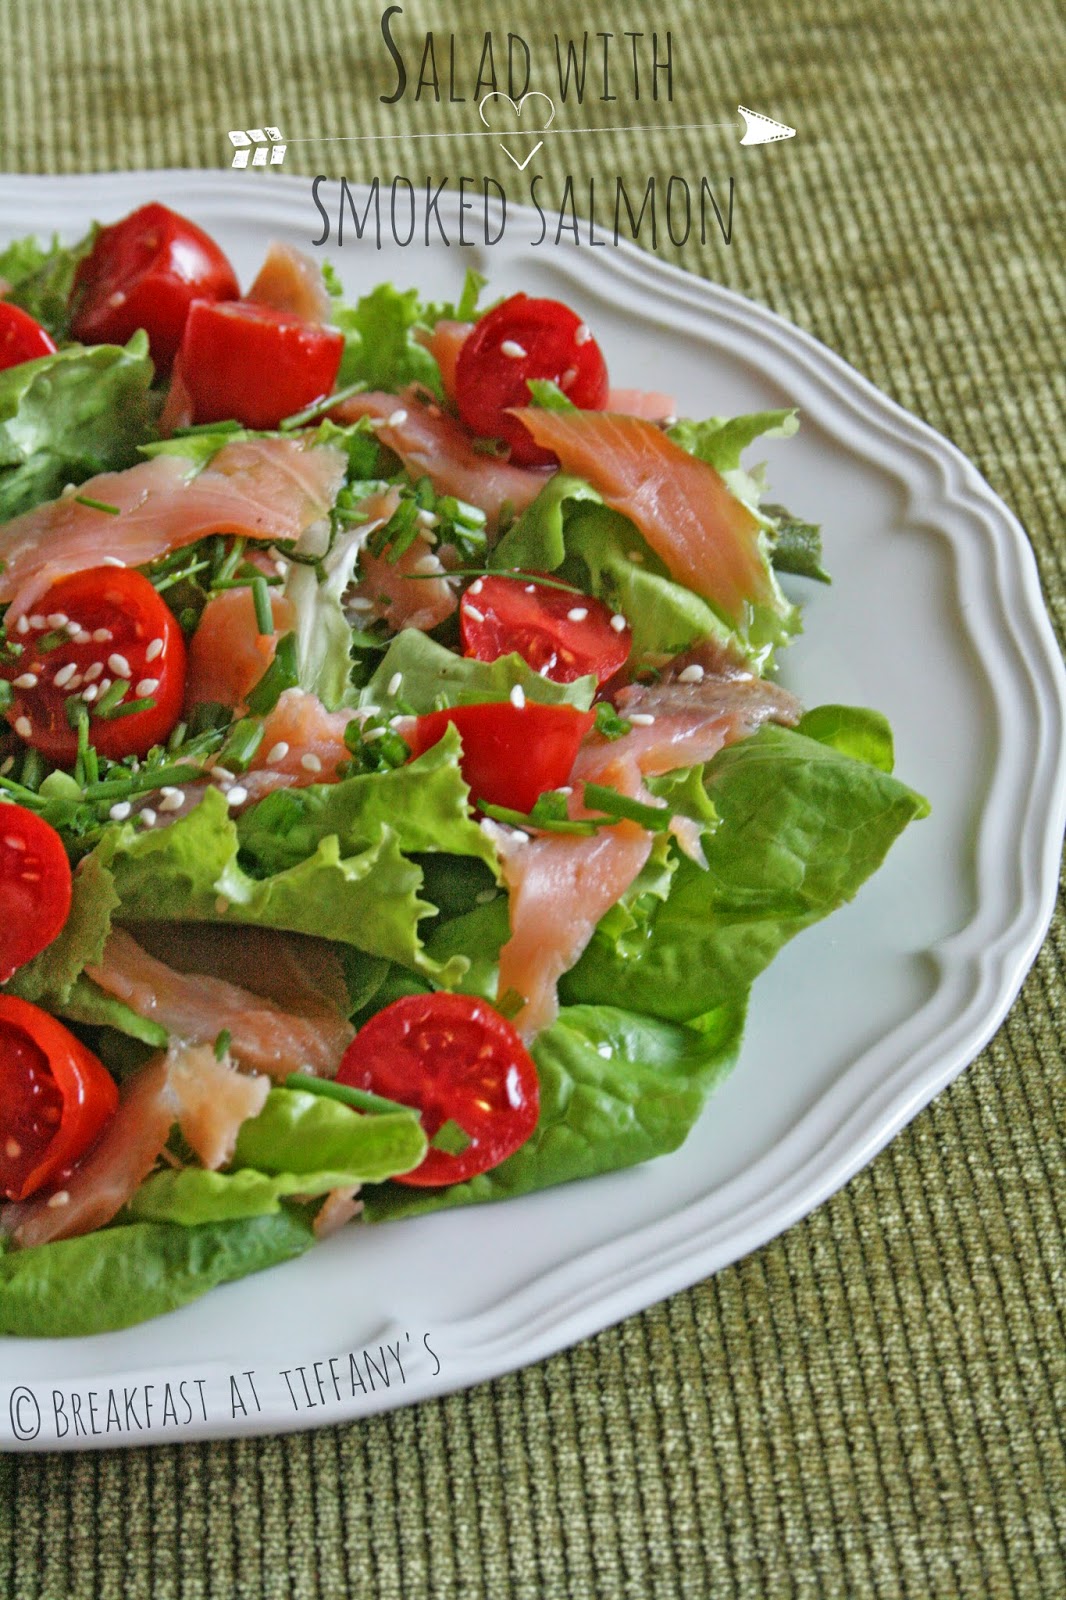 insalata con salmone affumicato / salad with smoked salmon